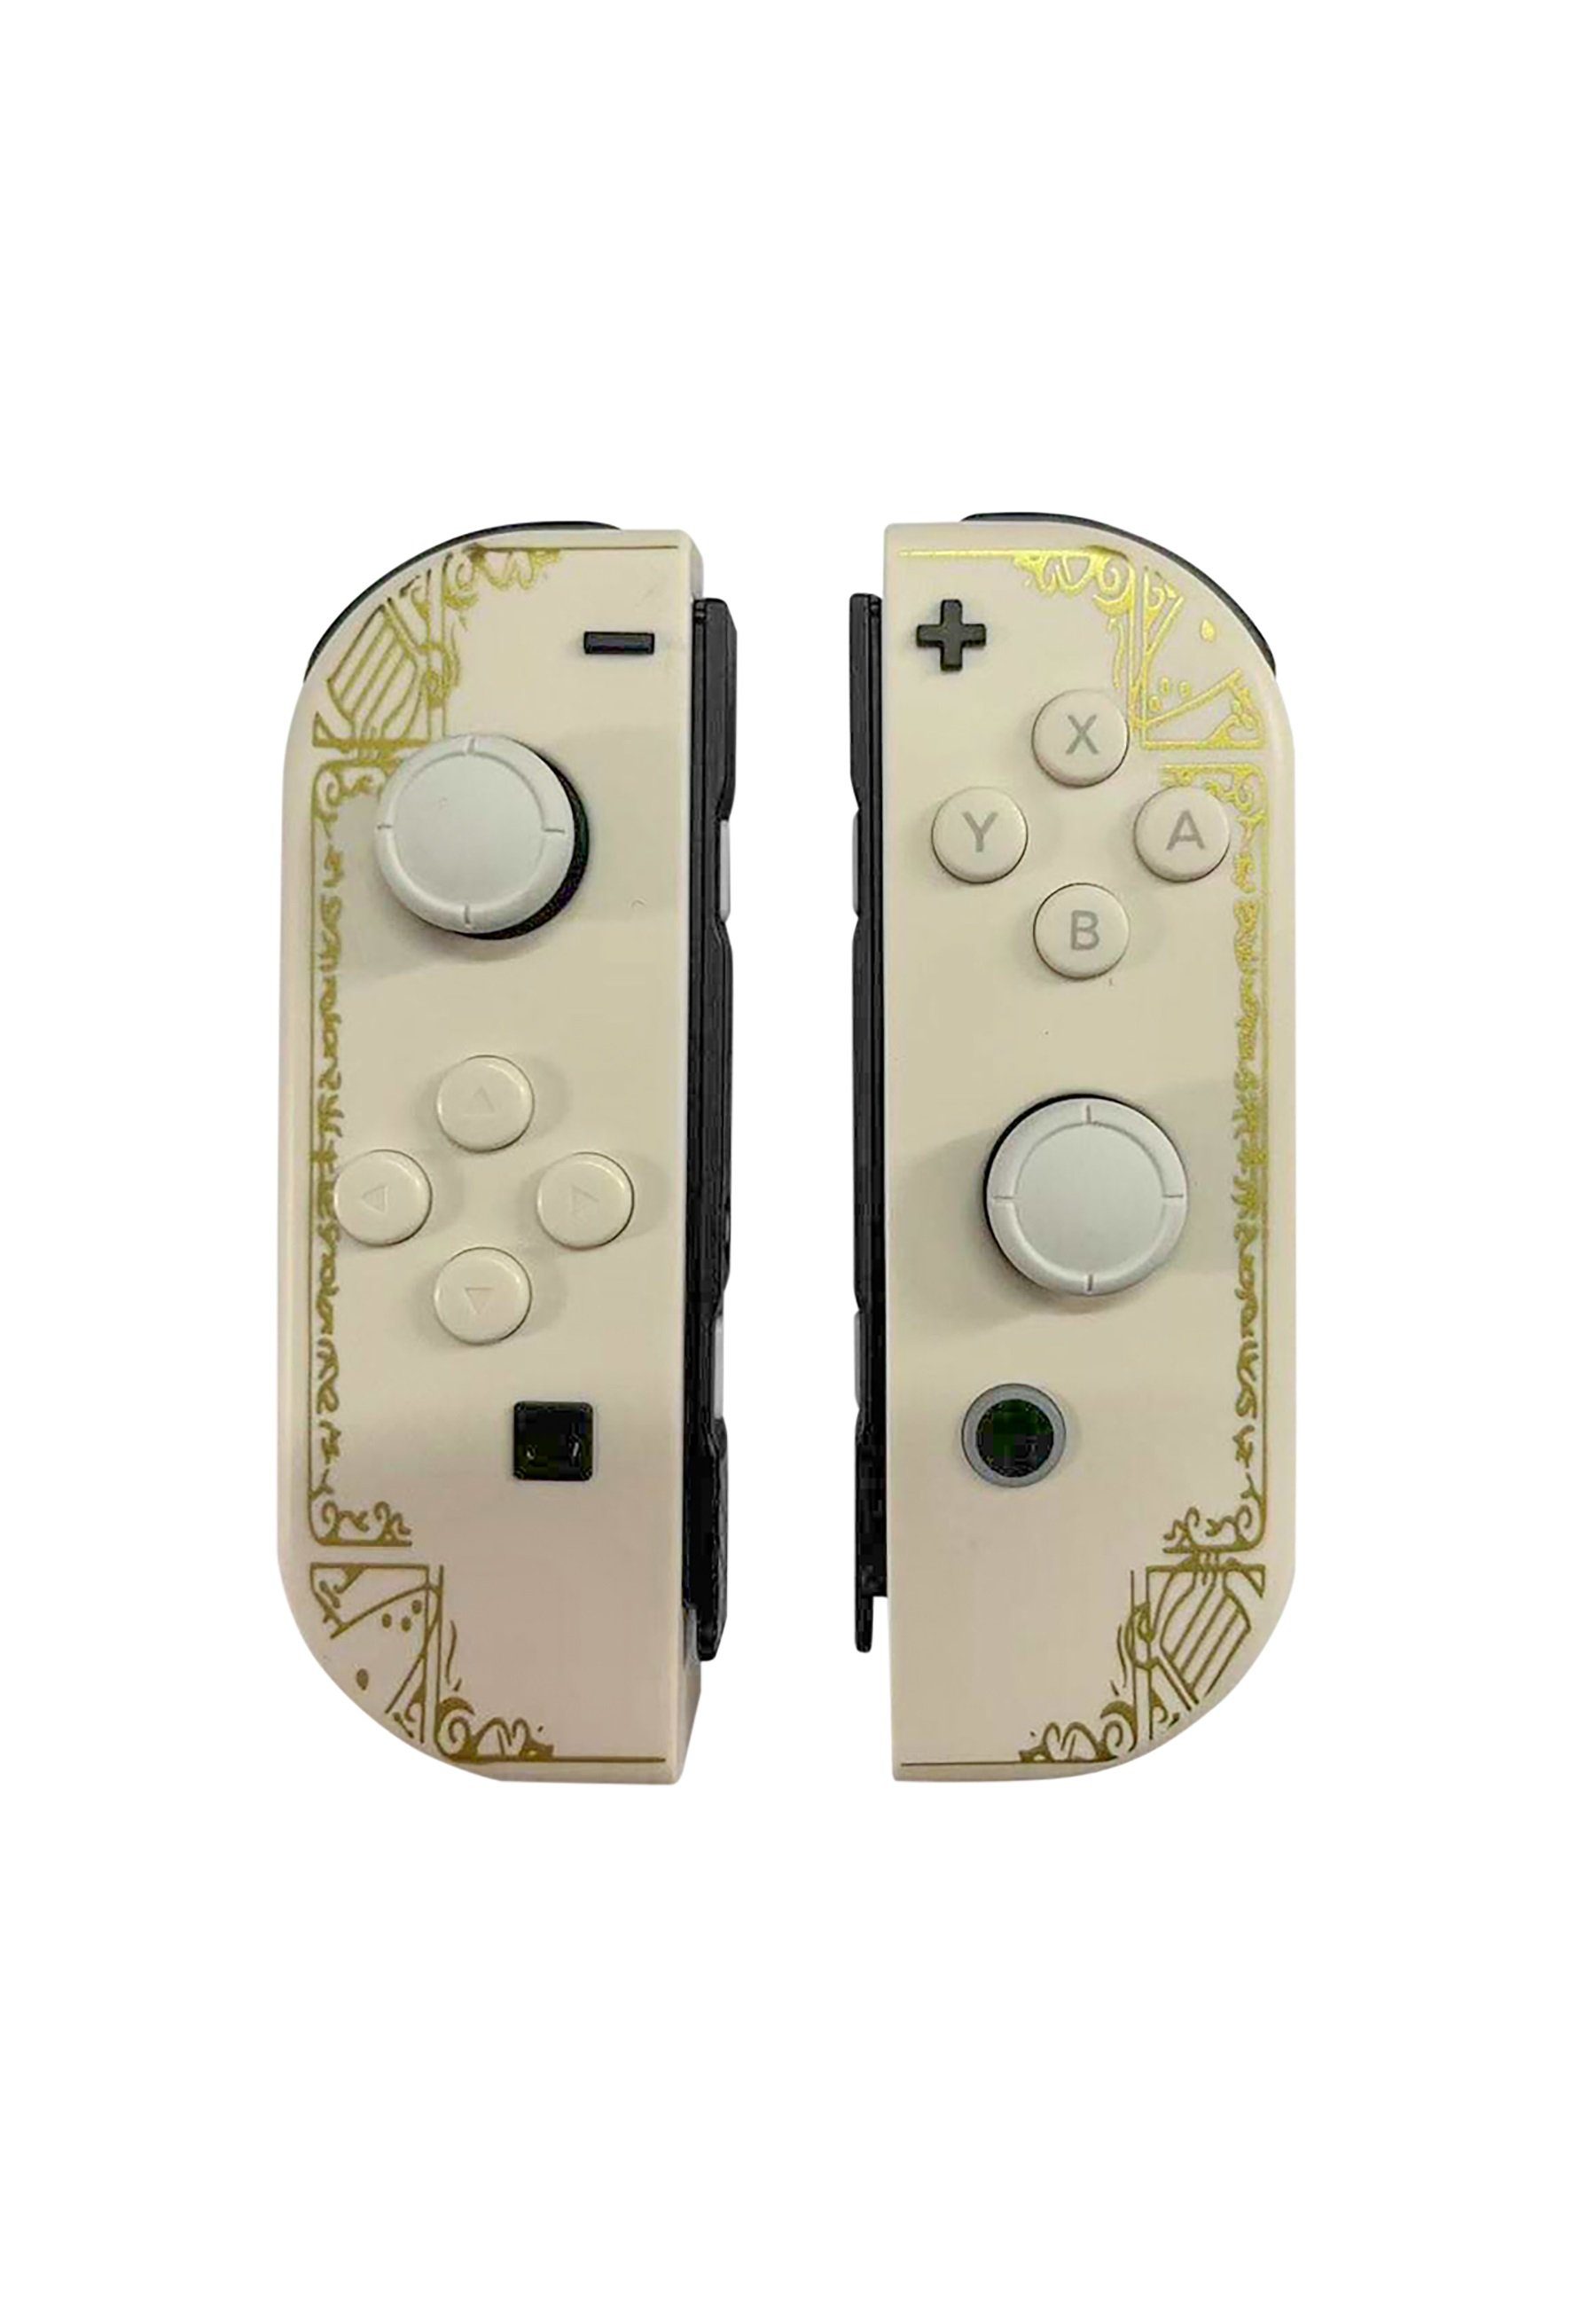 AKTO Verbessertes Switch-Gamepad: Vibration, direkte Verbindung, kompakt Nintendo-Controller (500-mAh-Akku, mit Weckfunktion, Vibrationsmotor)